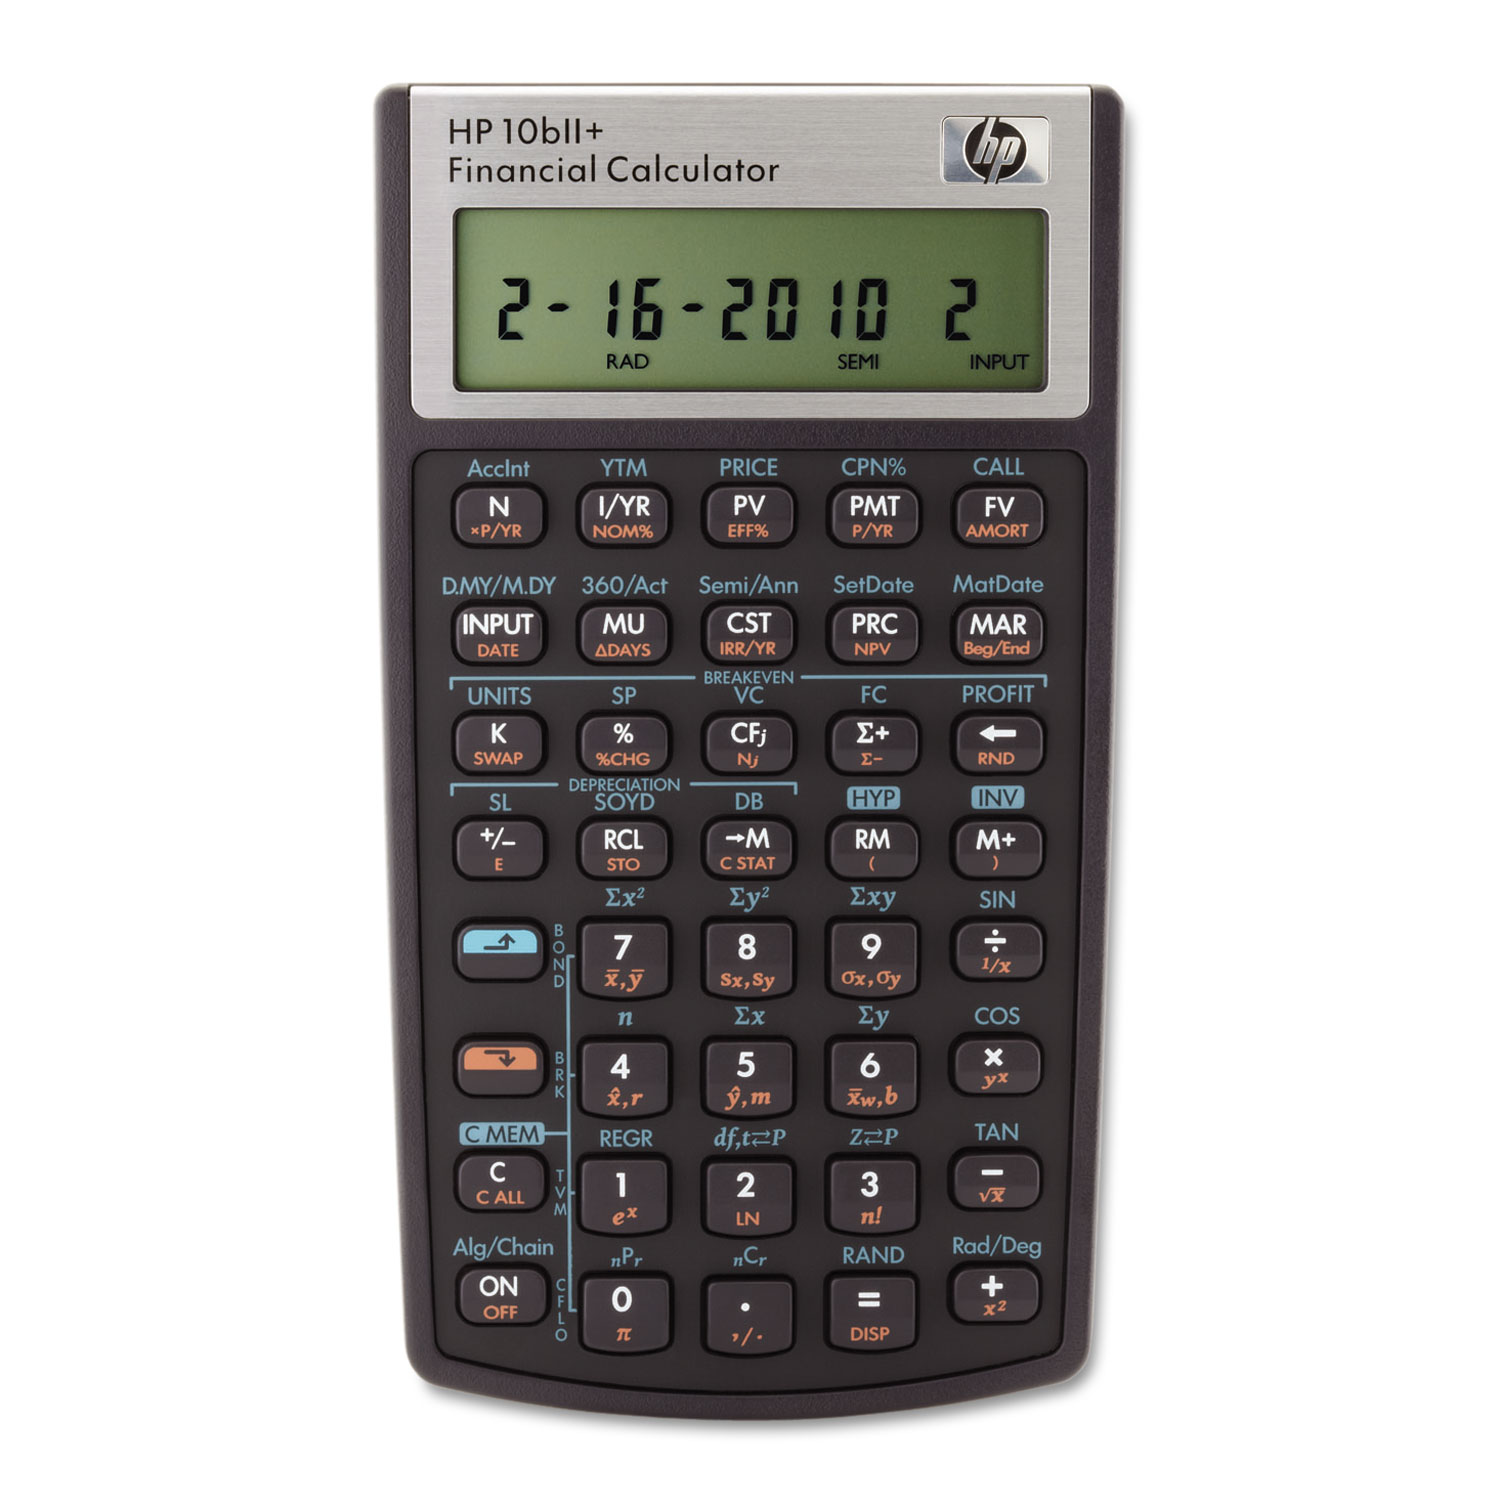  HP 2716570 10bII+ Financial Calculator, 12-Digit LCD (HEW2716570) 